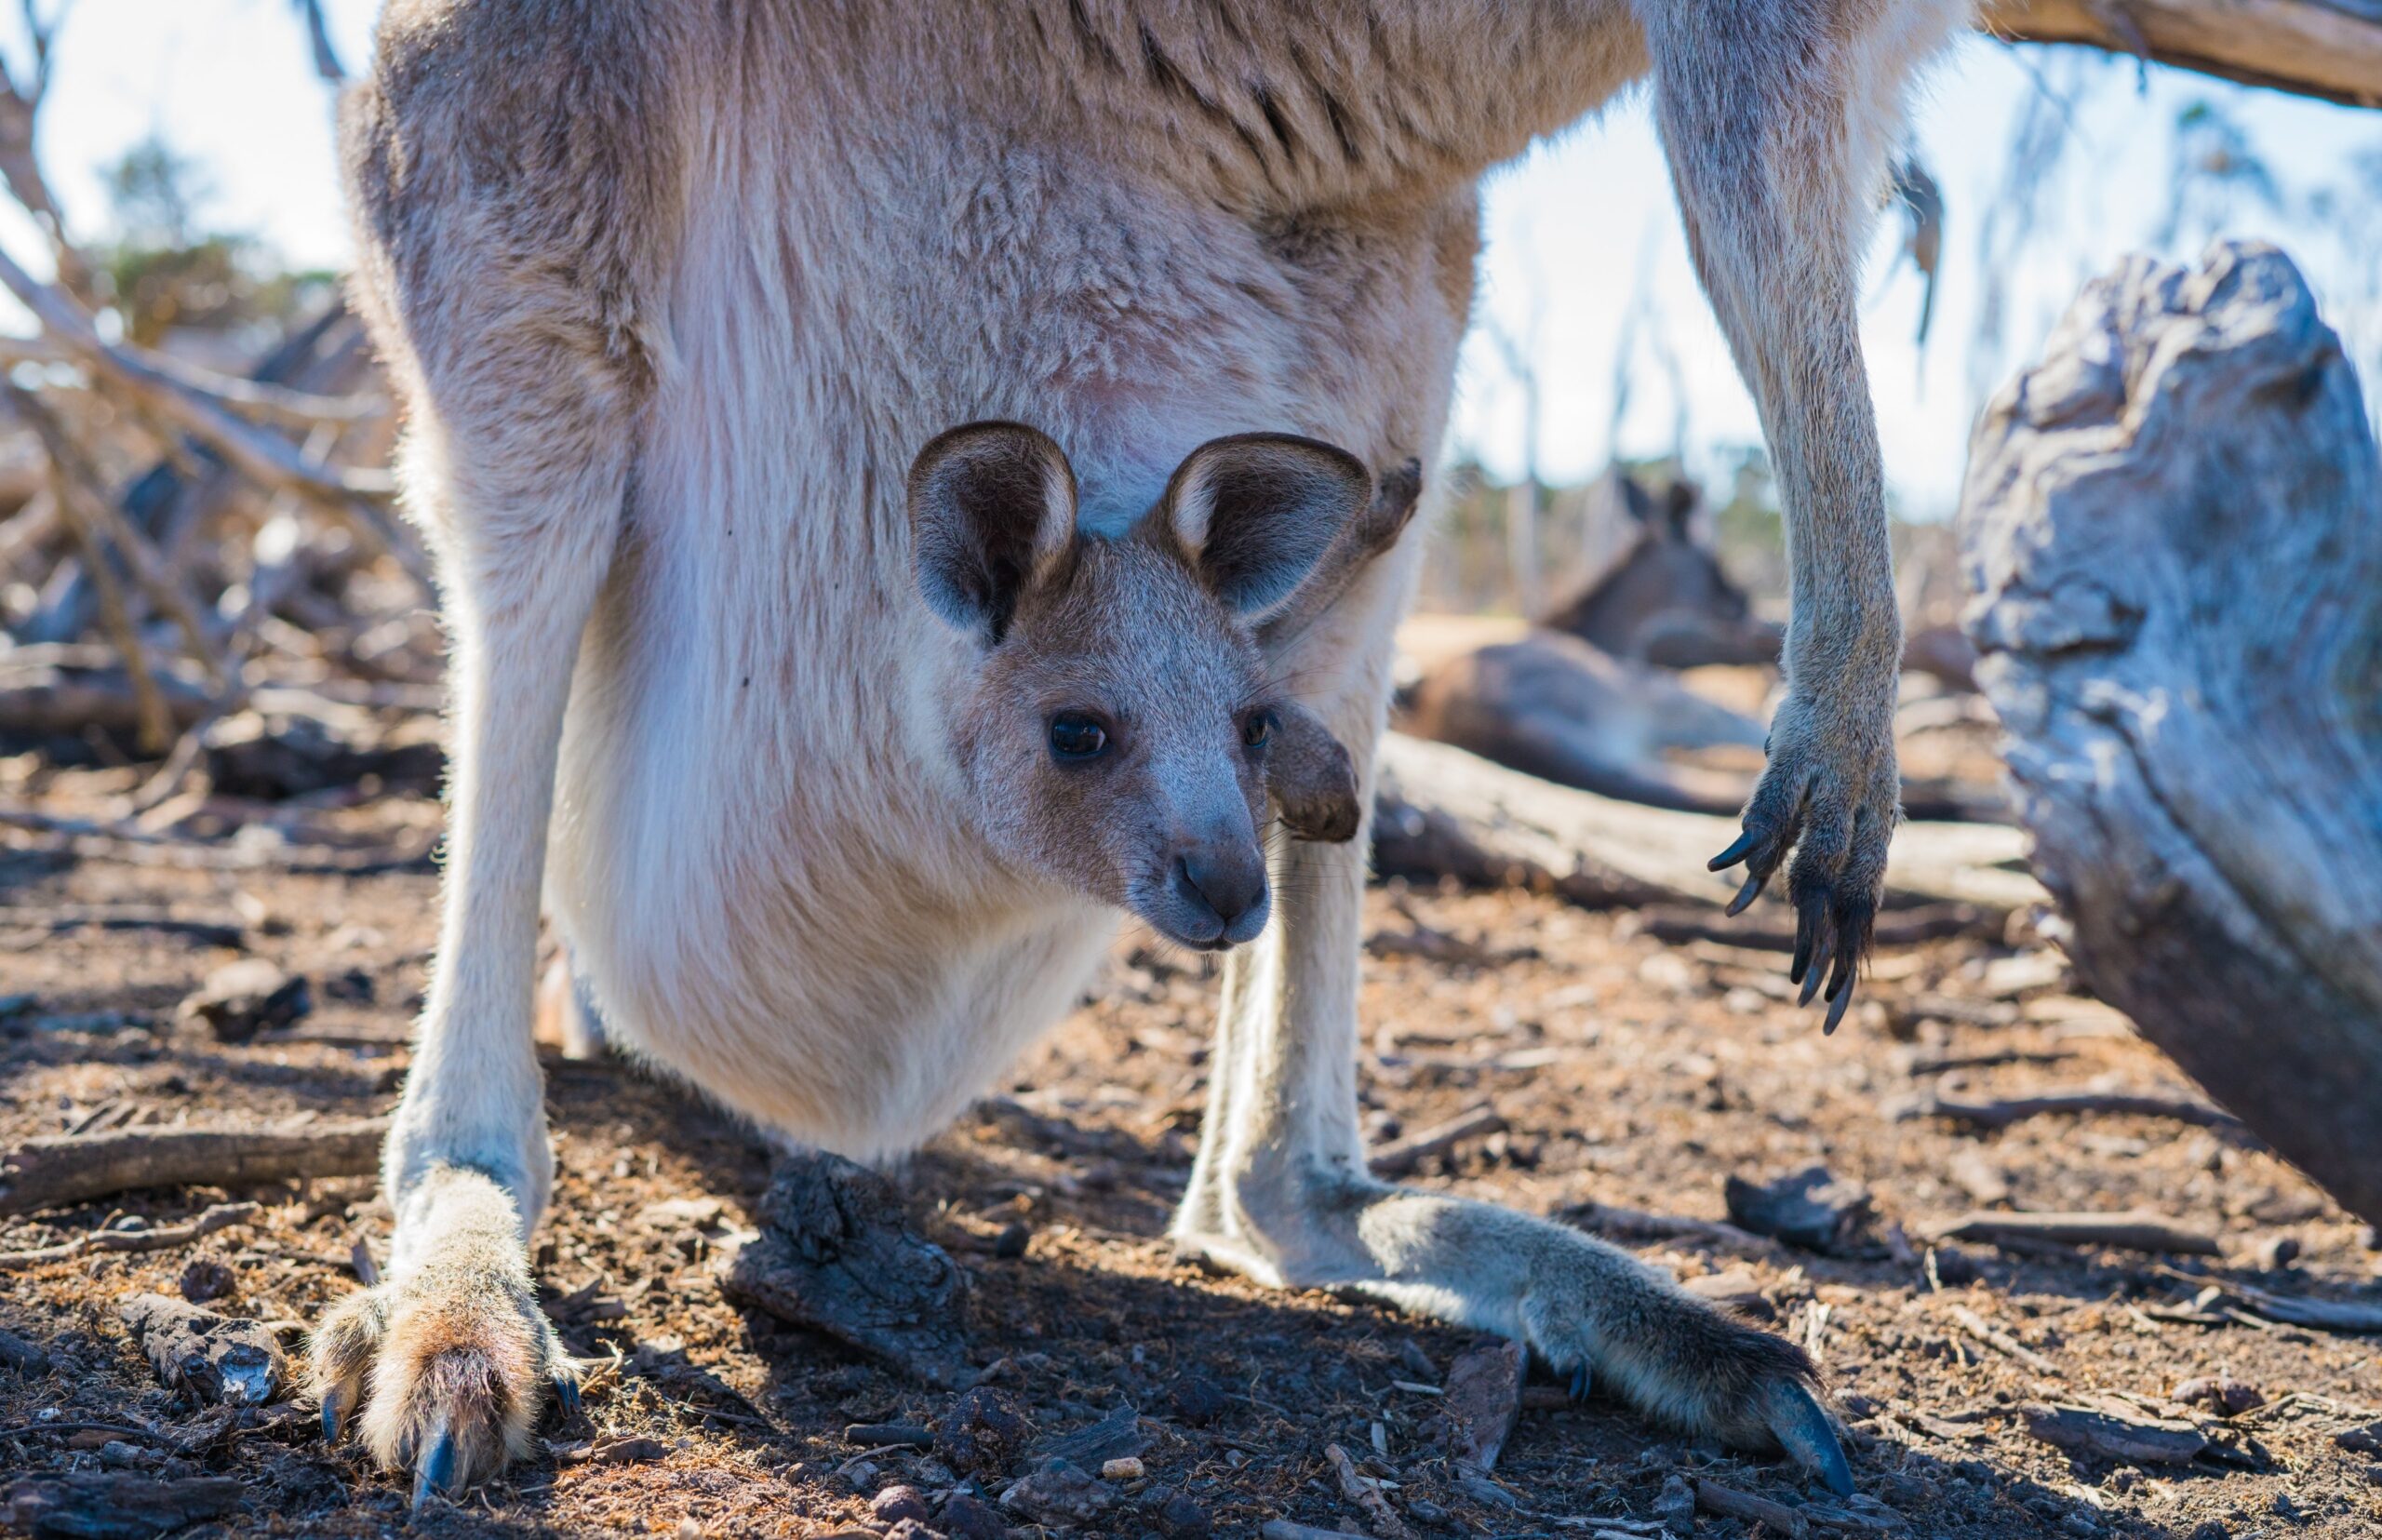 Exploring Australia's native wildlife